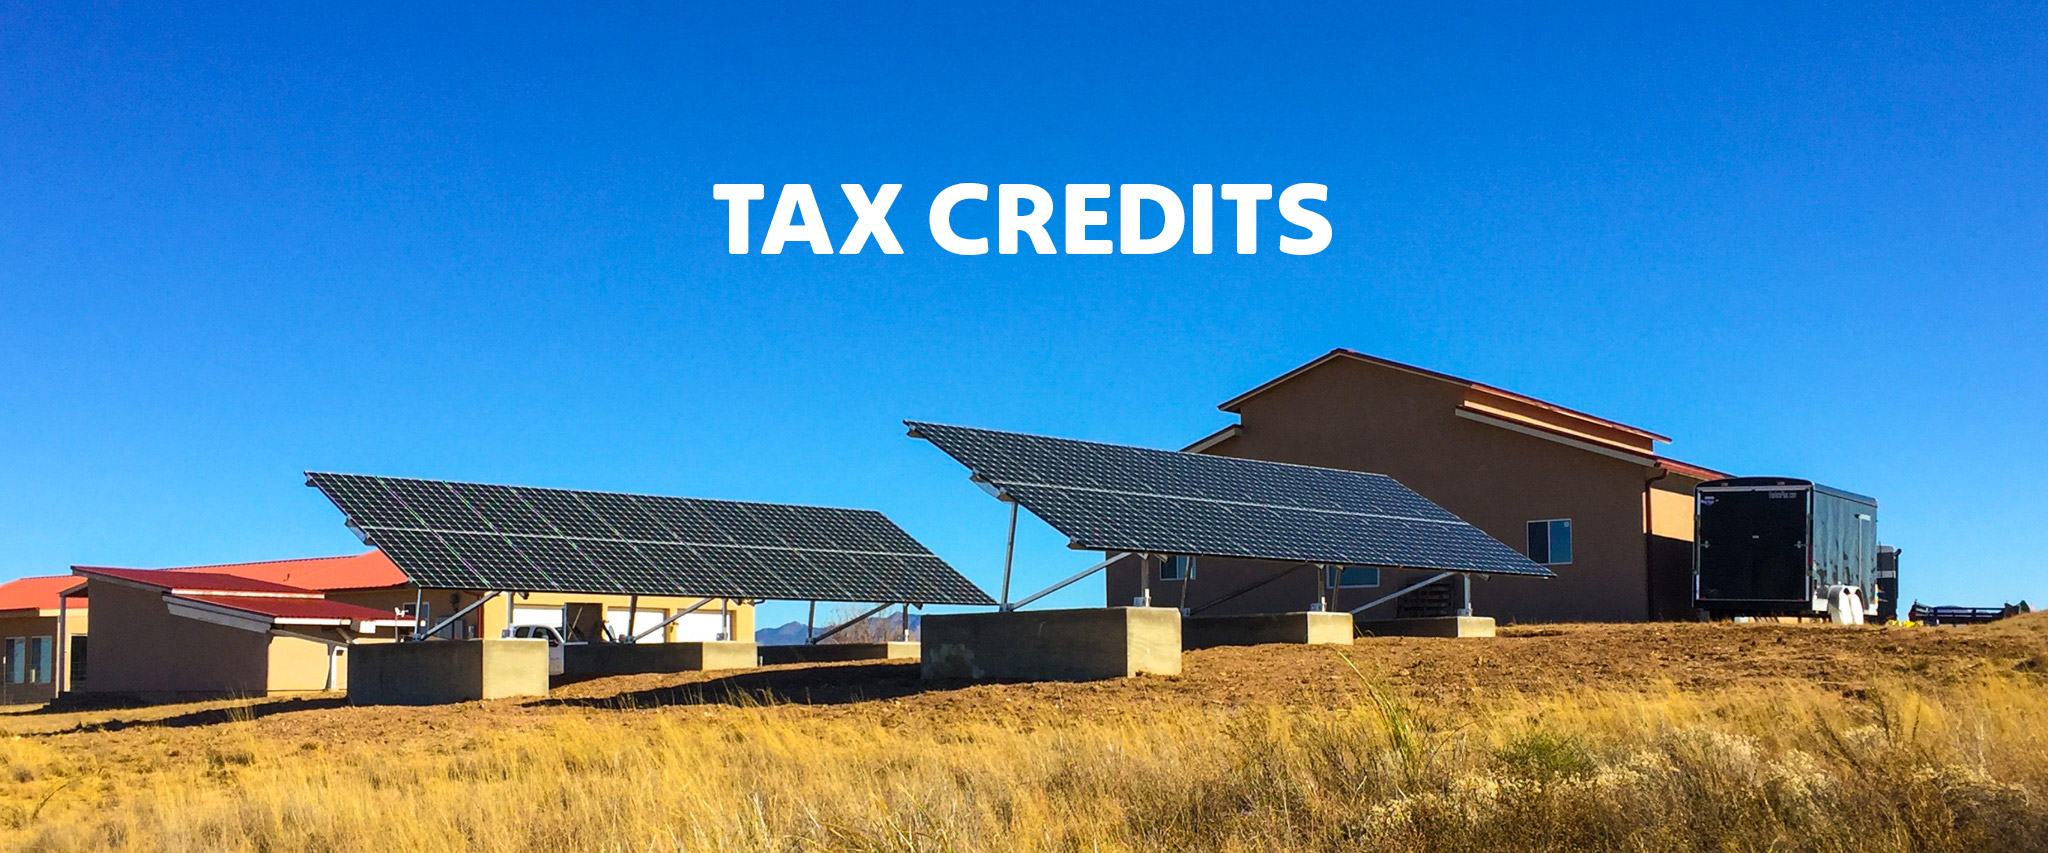 tax-credits-for-solar-power-systems-net-zero-solar